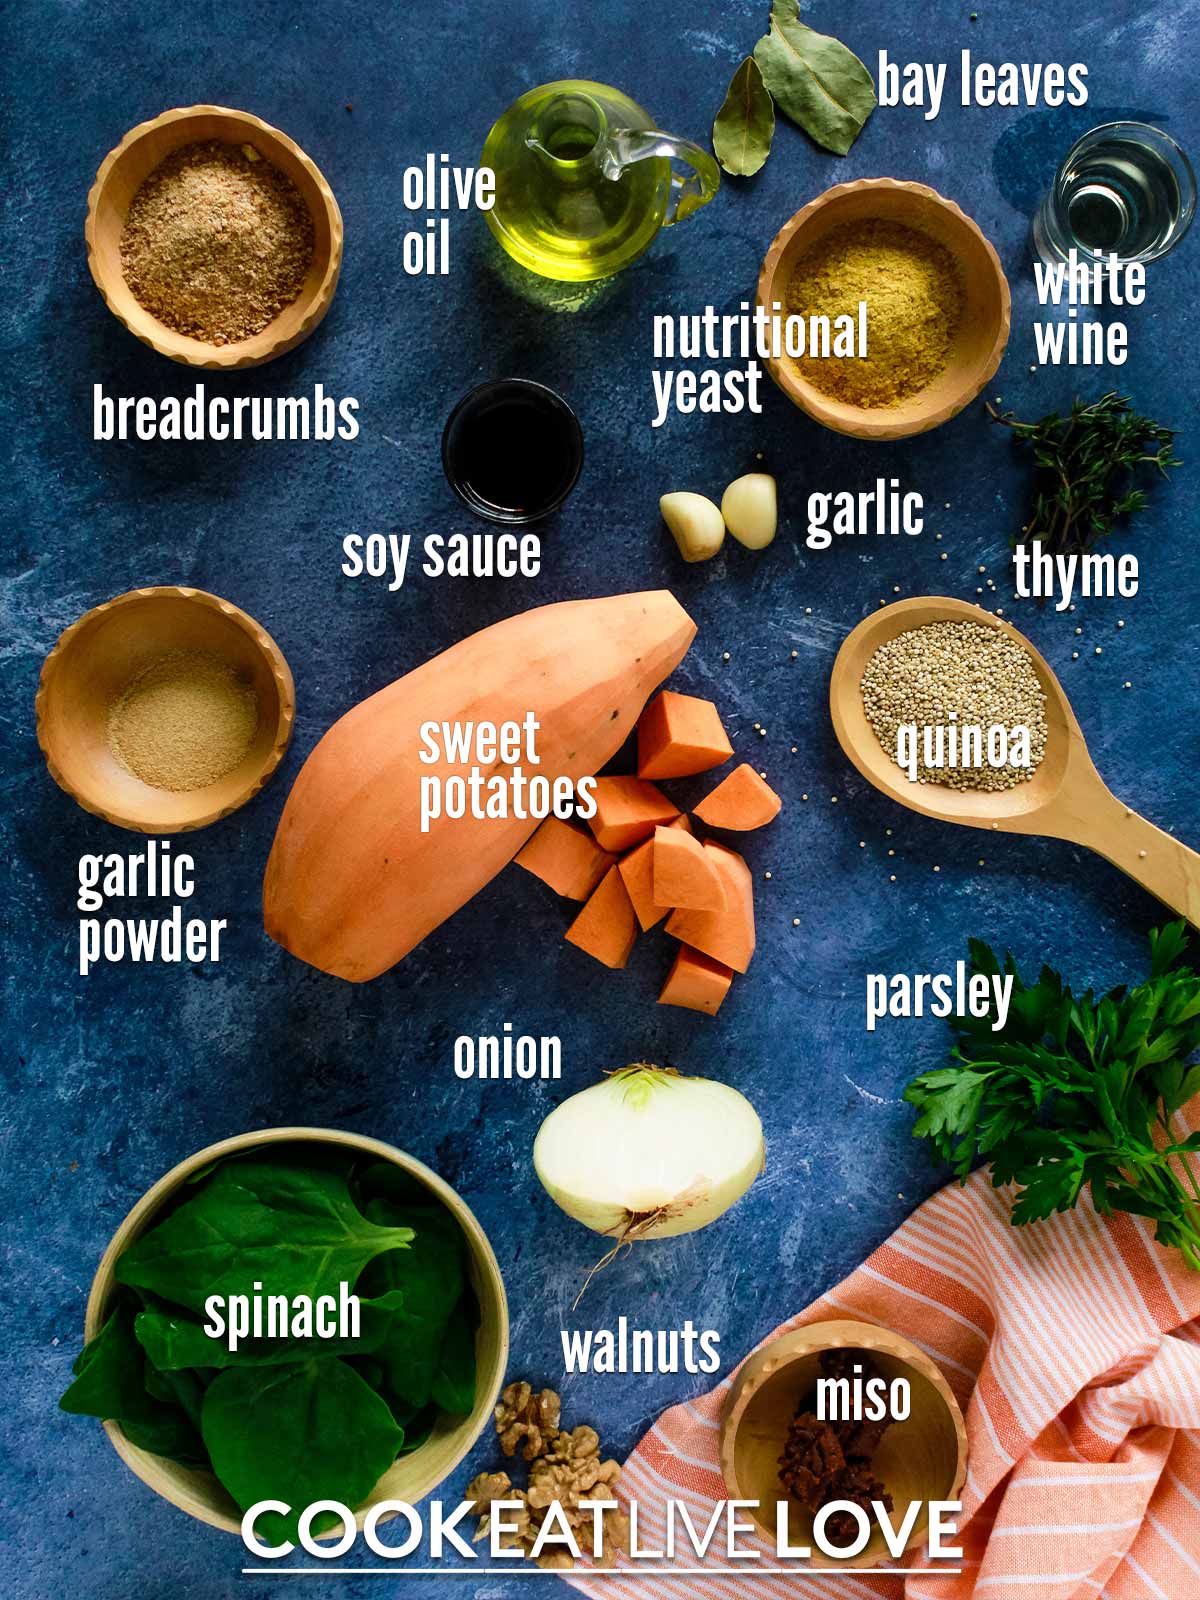 Ingredients to make savory sweet potato casserole.